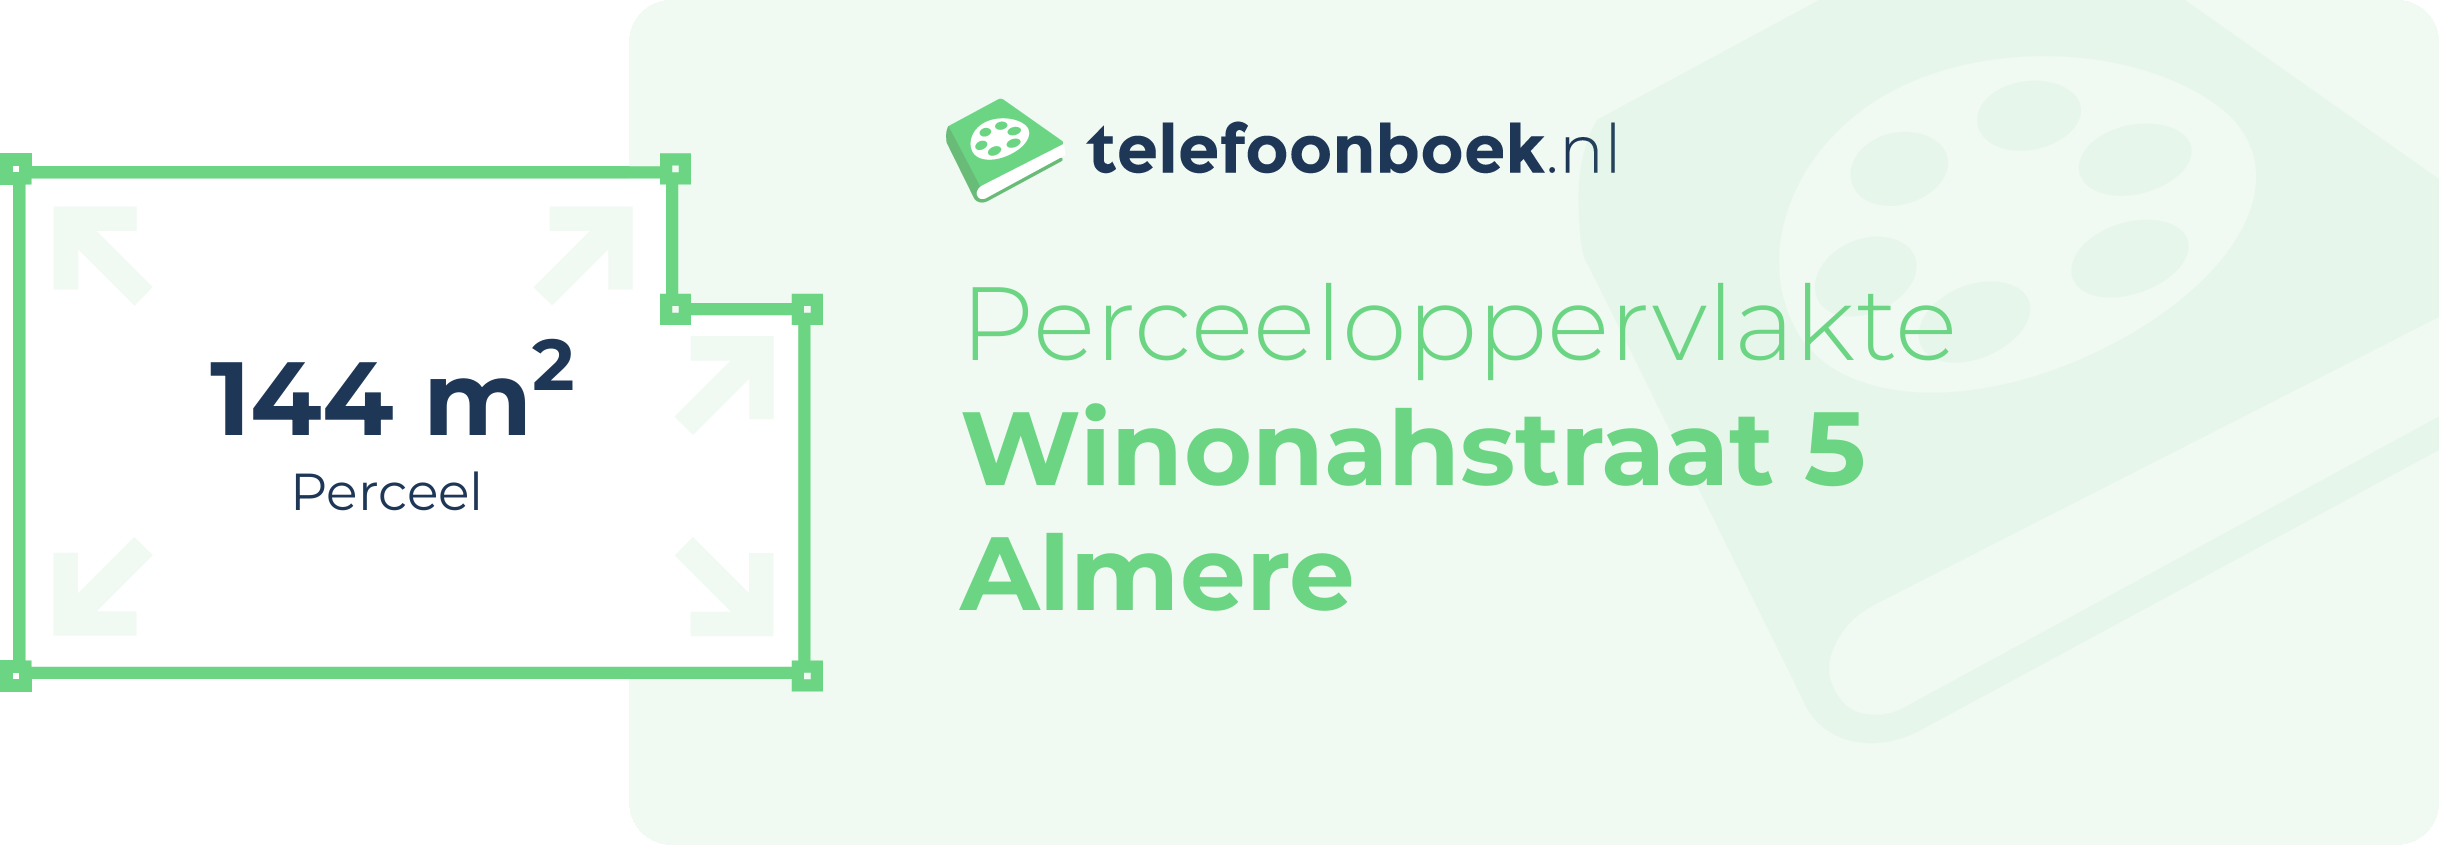 Perceeloppervlakte Winonahstraat 5 Almere